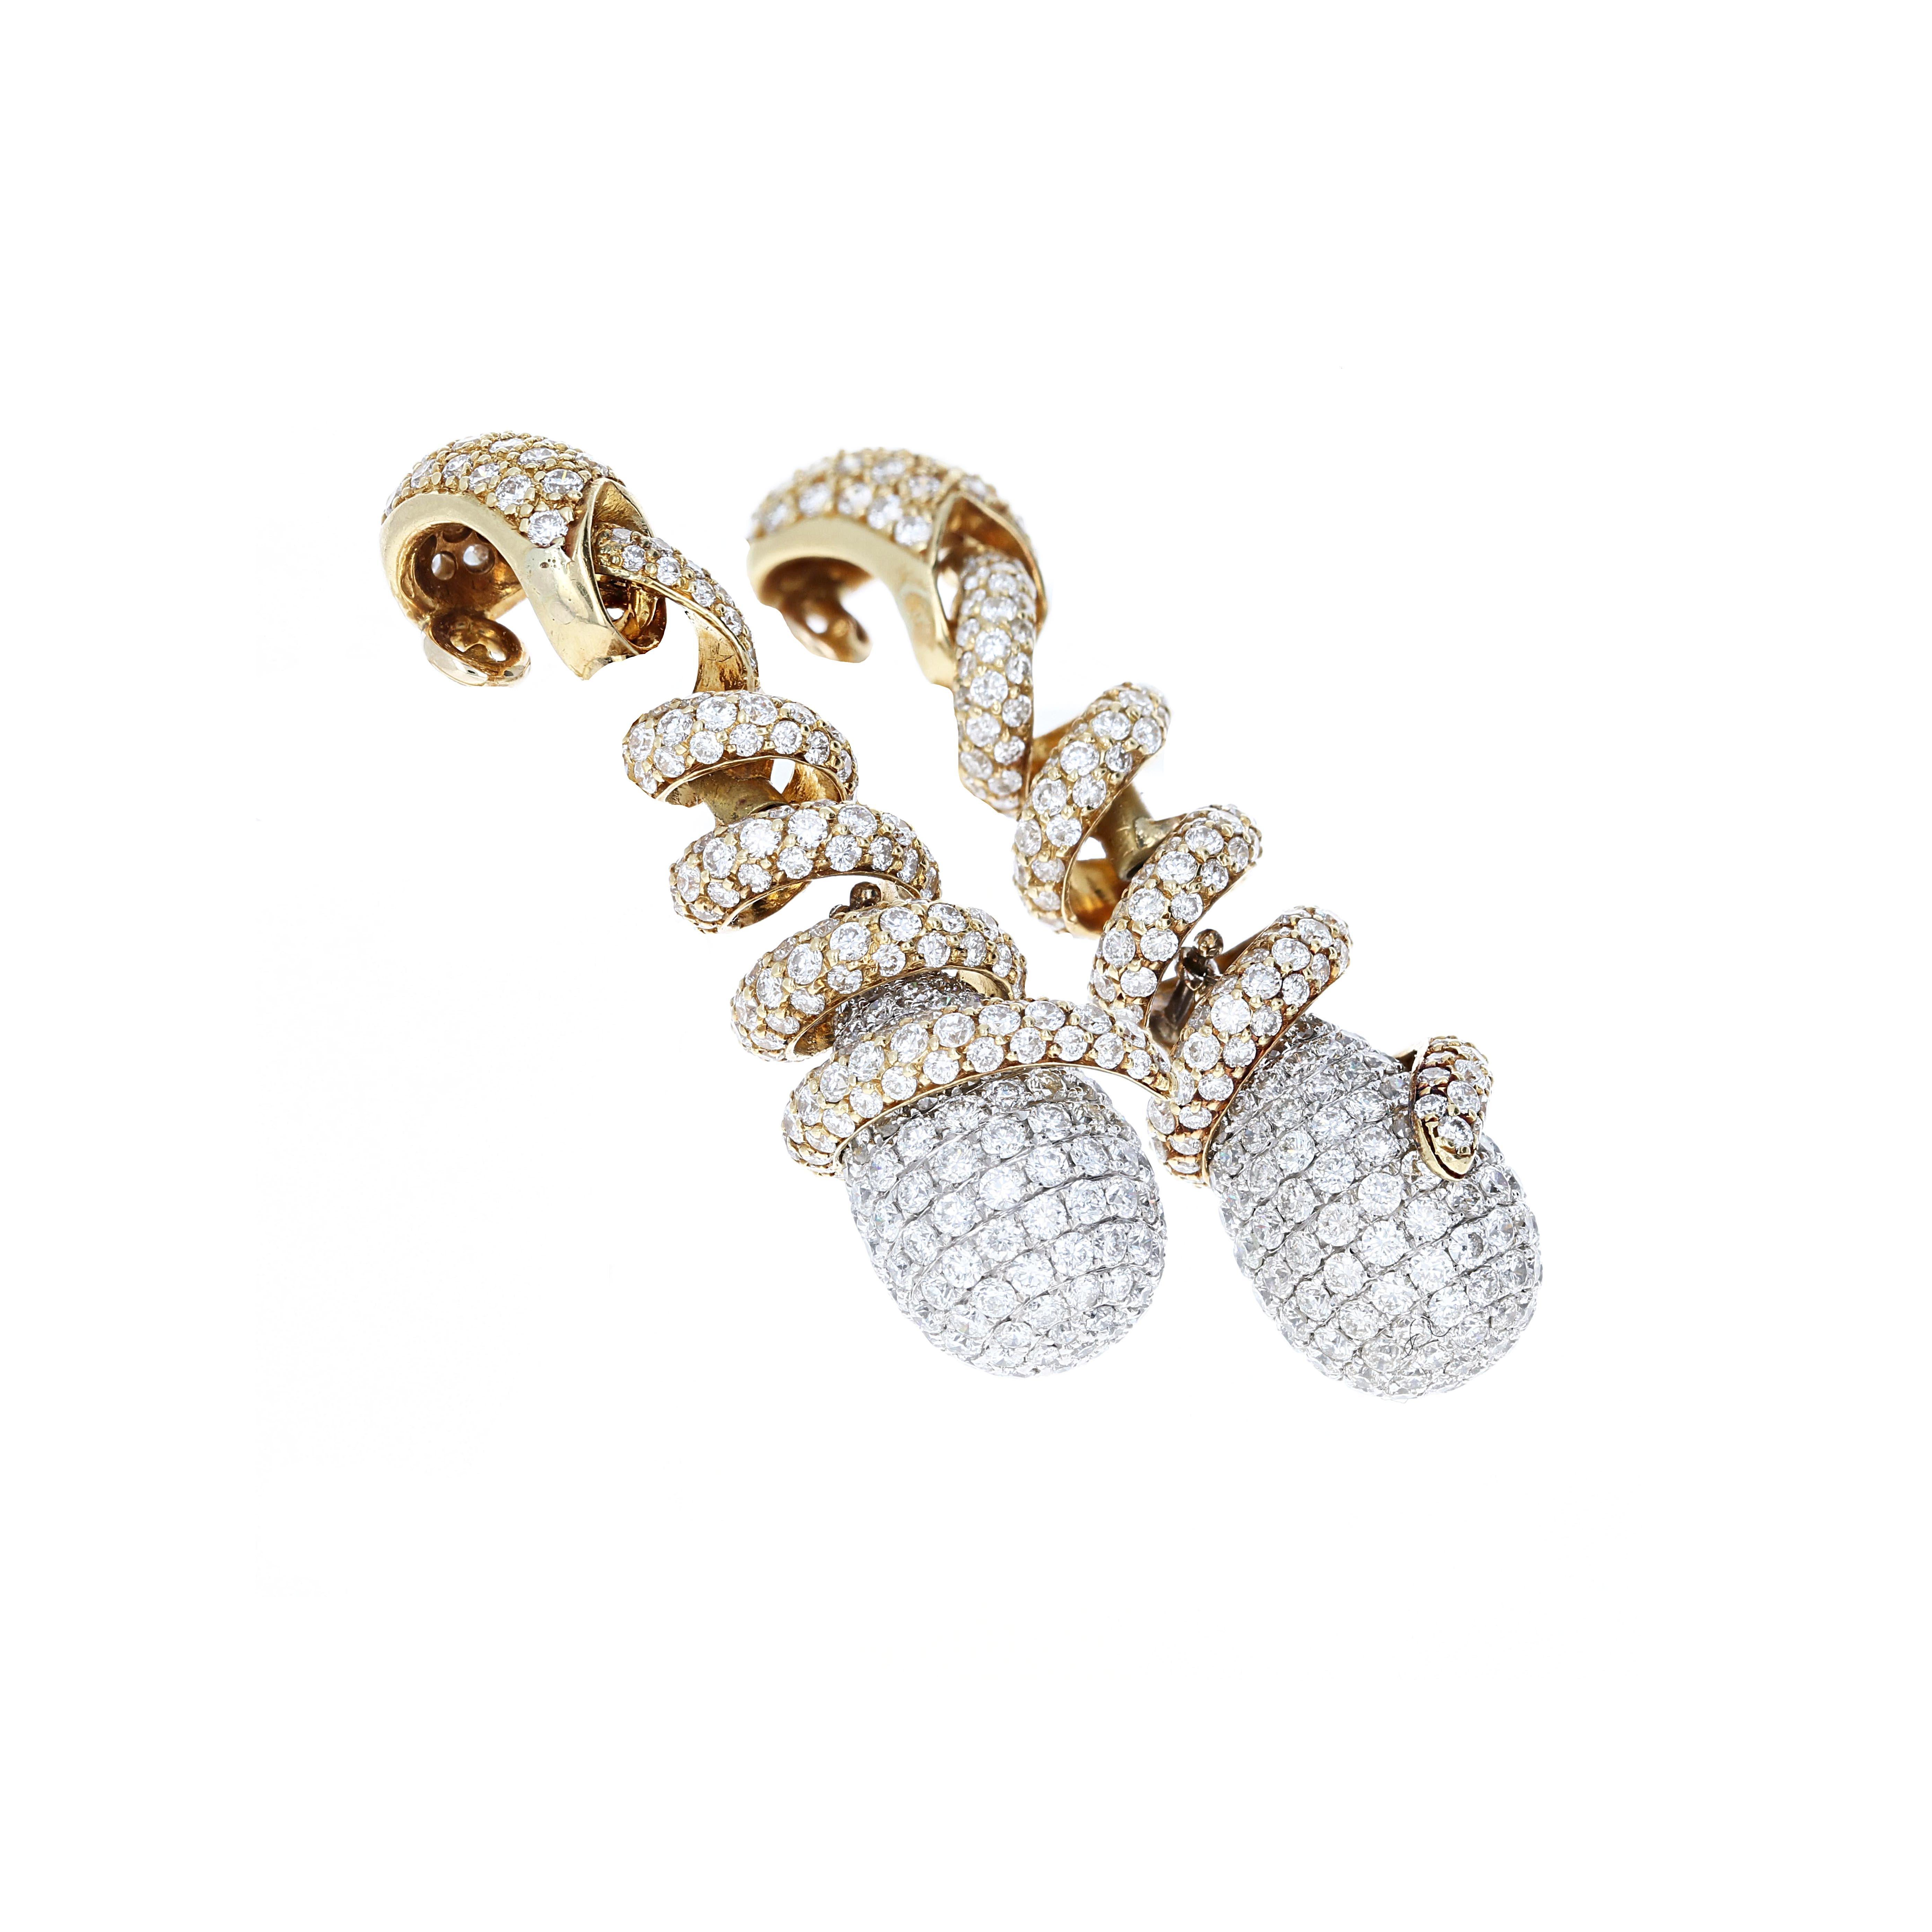 Modern Approximate 6.50 Carat Diamond 18 Karat Yellow and White Gold Drop Earrings